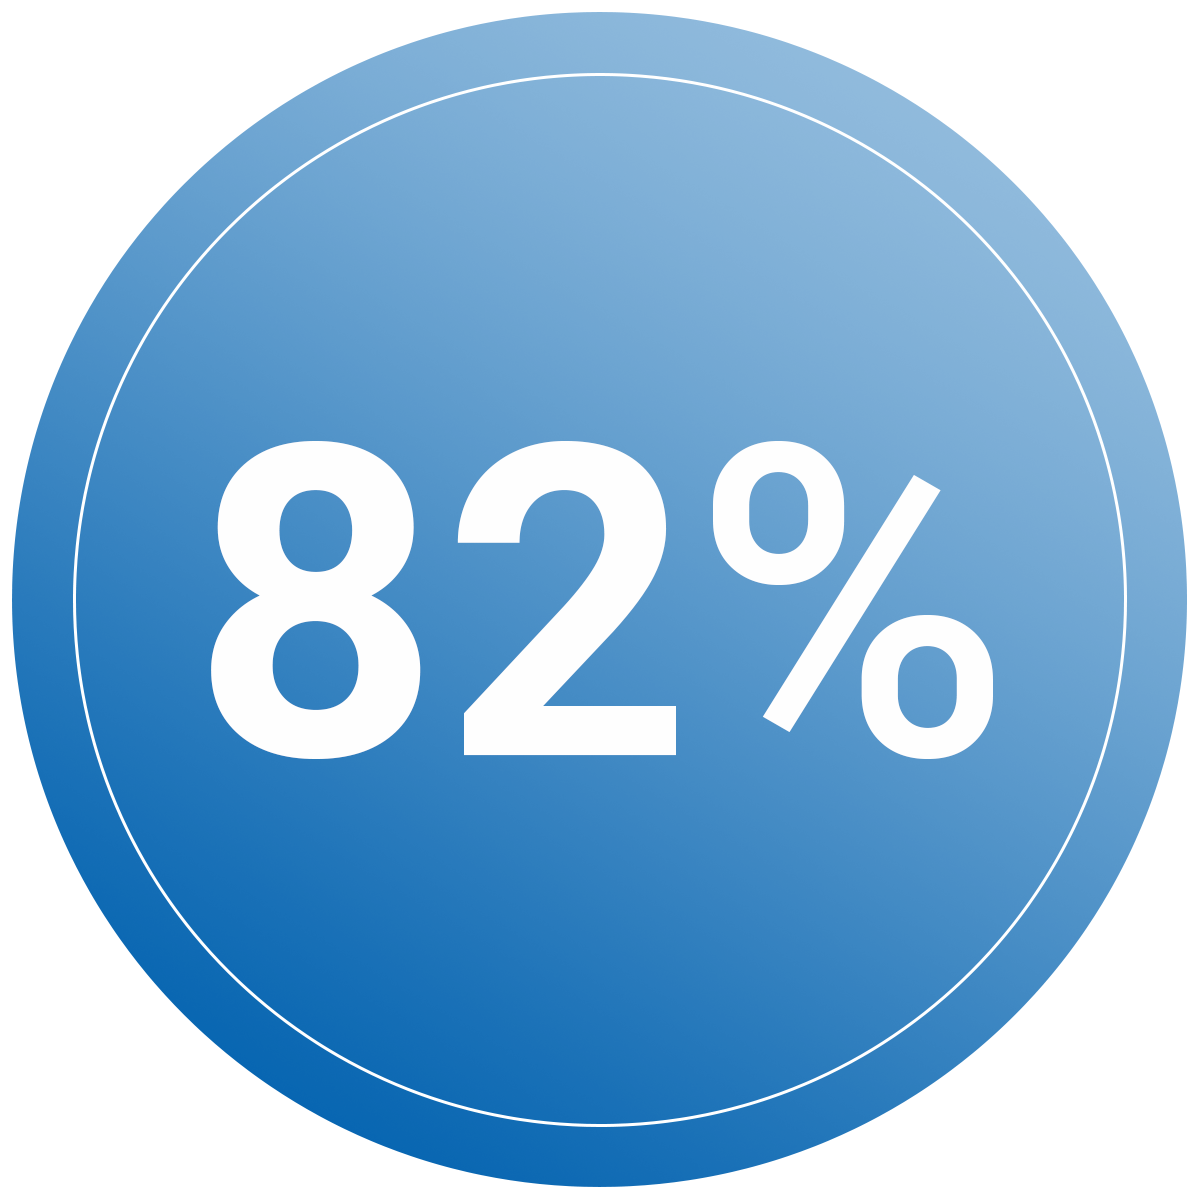 82% Icon